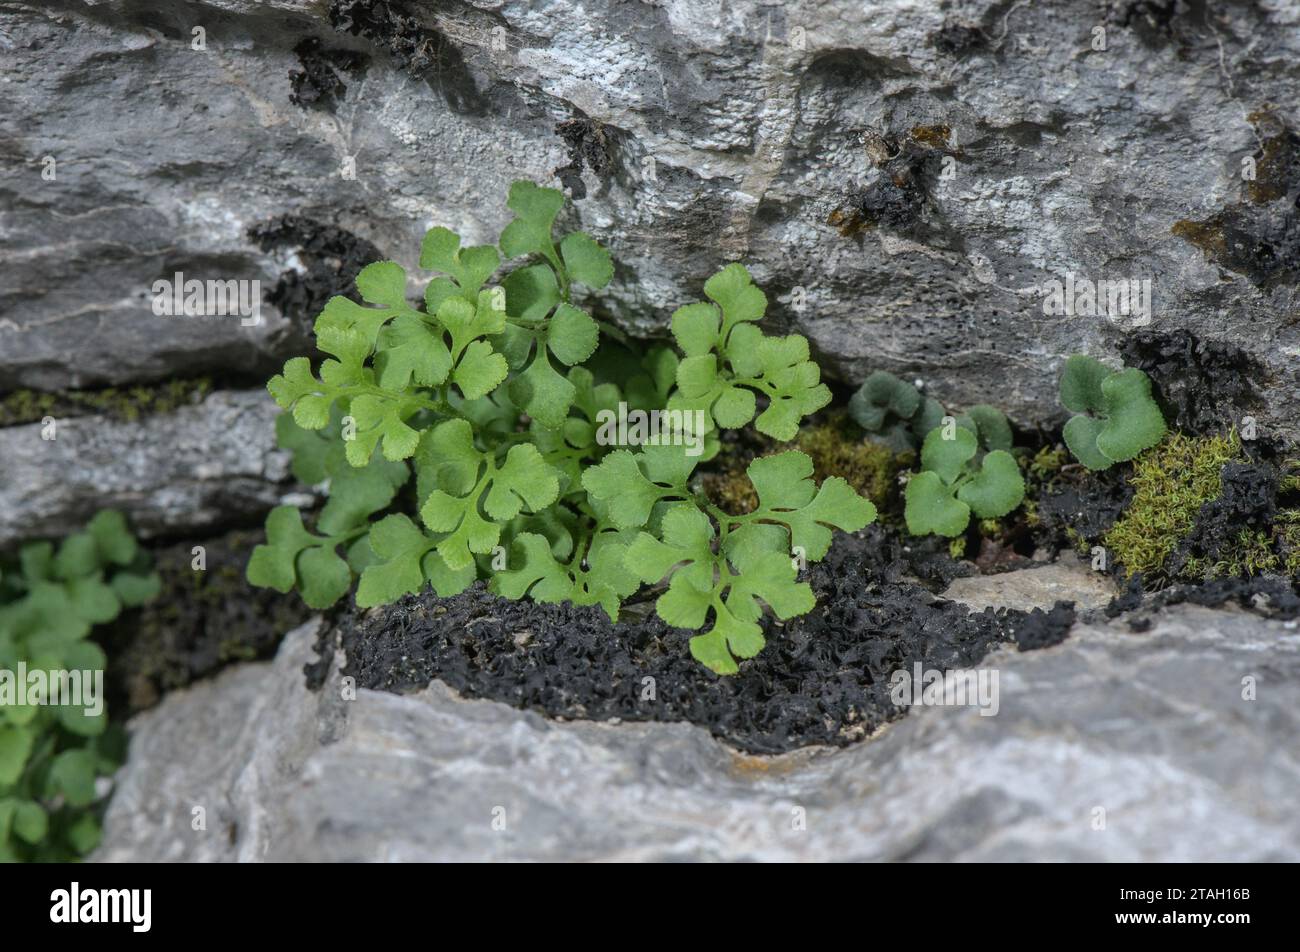 Wall-rue, Asplenium ruta-muraria, fern growing on old limestone wall. Stock Photo